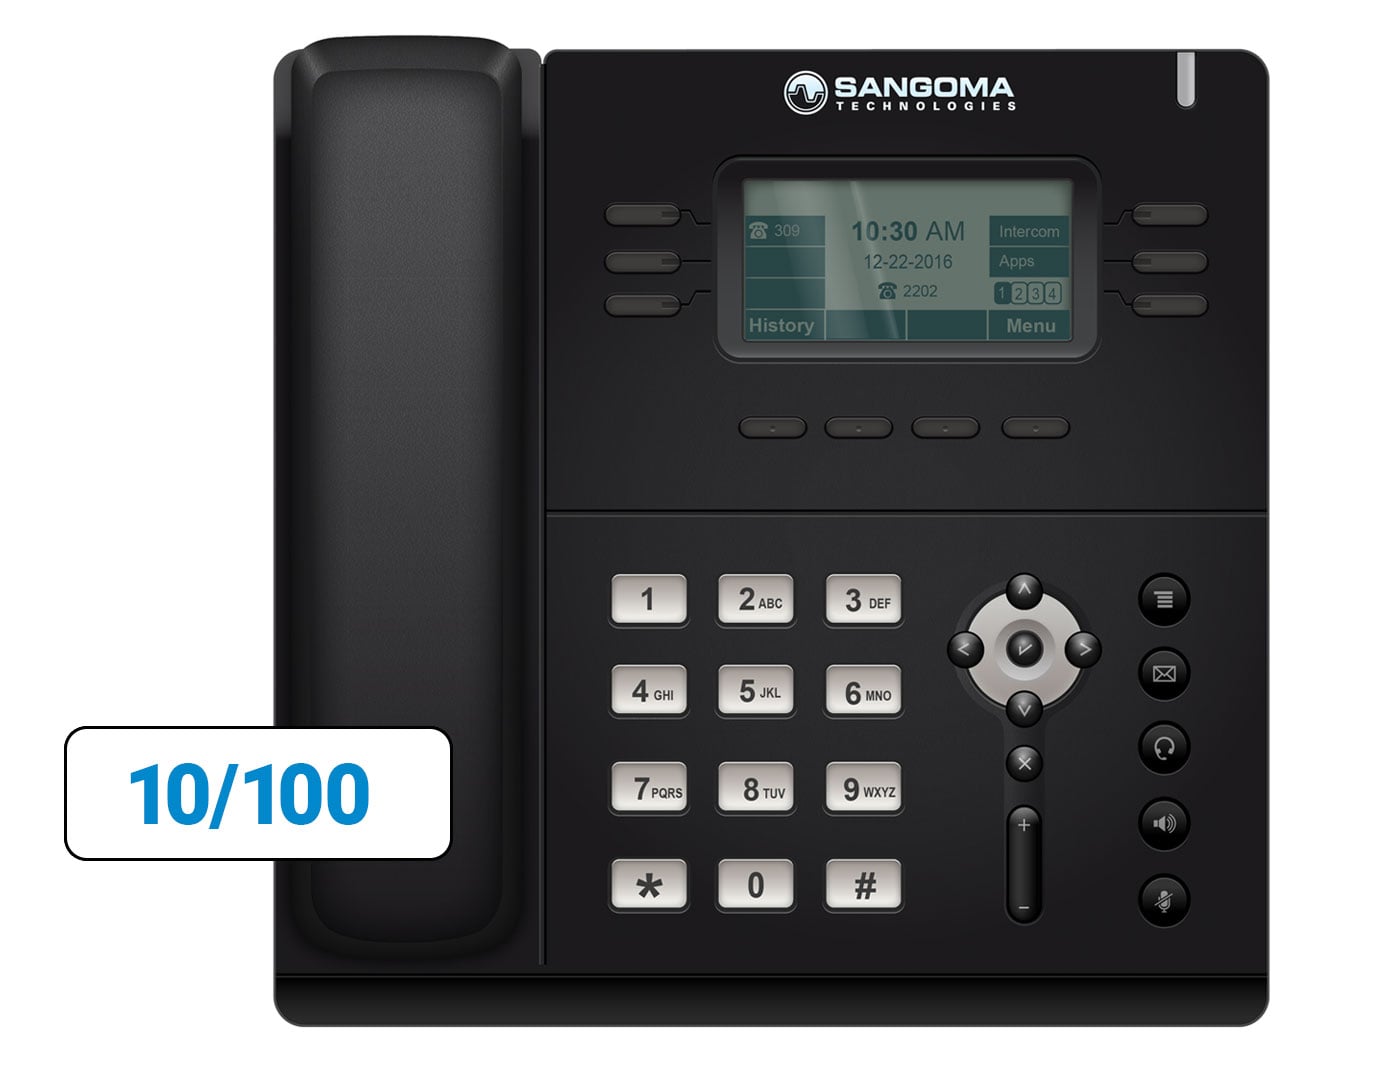 Sangoma S400 Phone